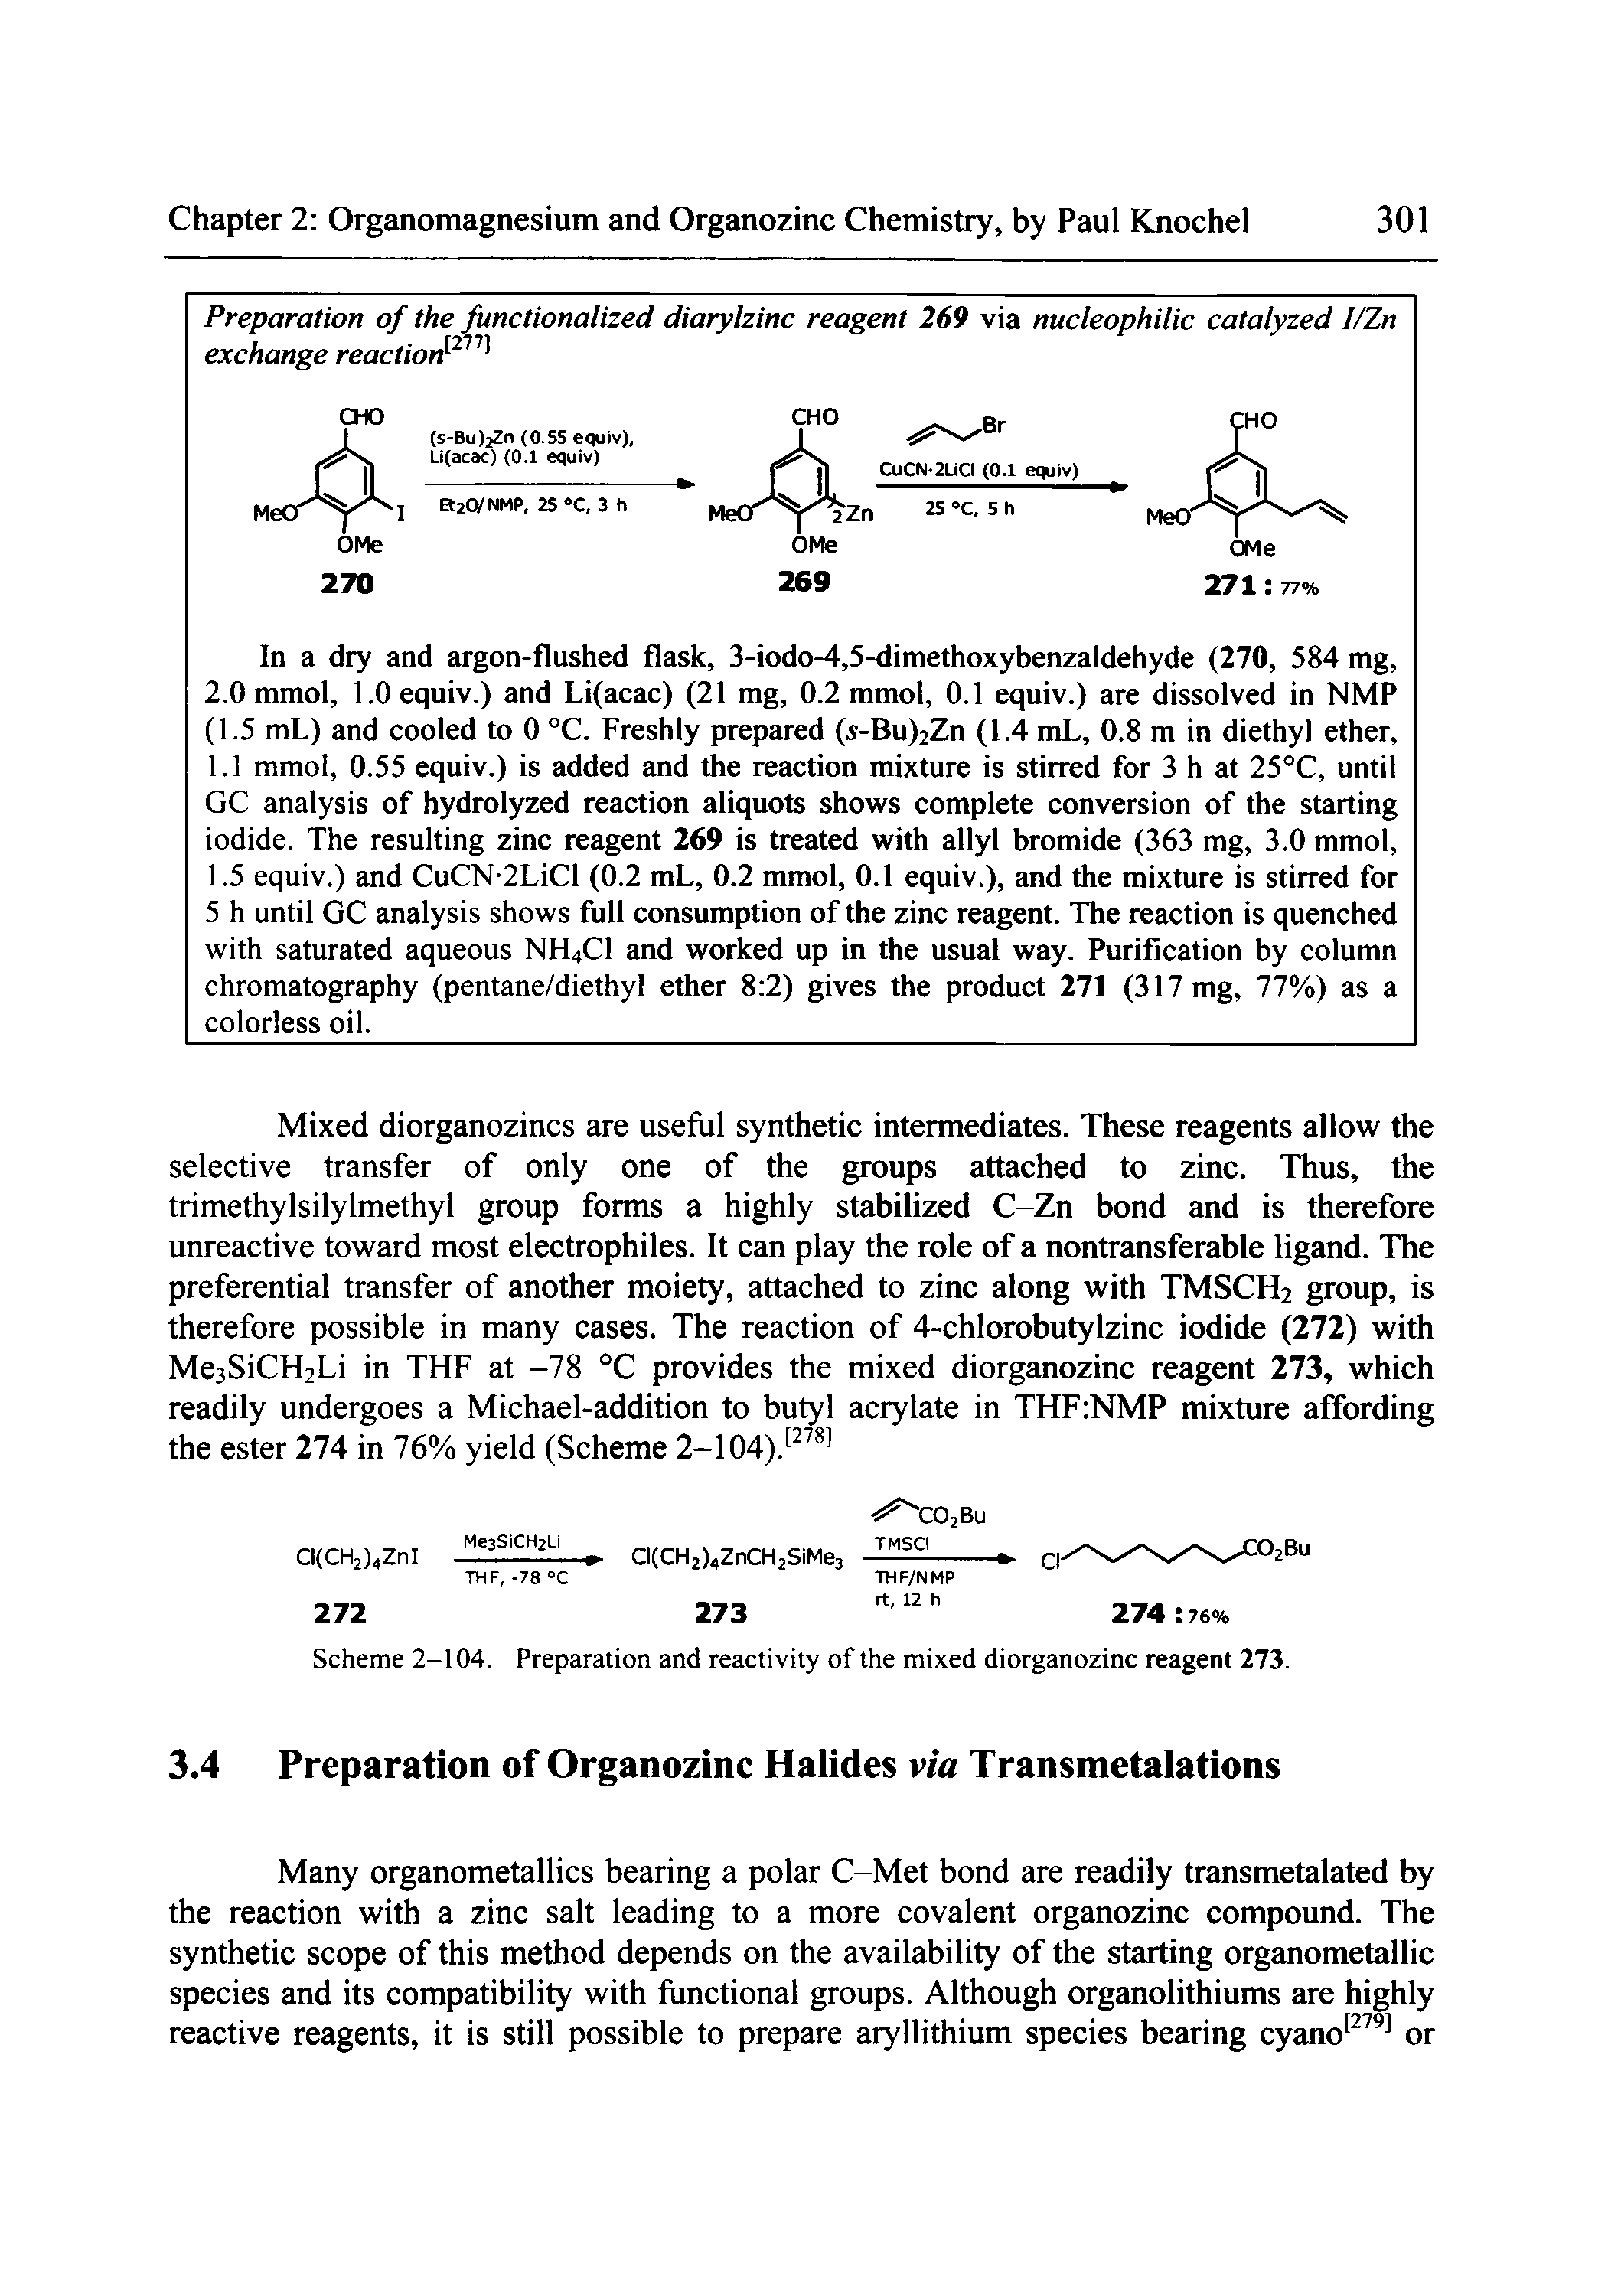 Scheme 2-104. Preparation and reactivity of the mixed diorganozinc reagent 273.